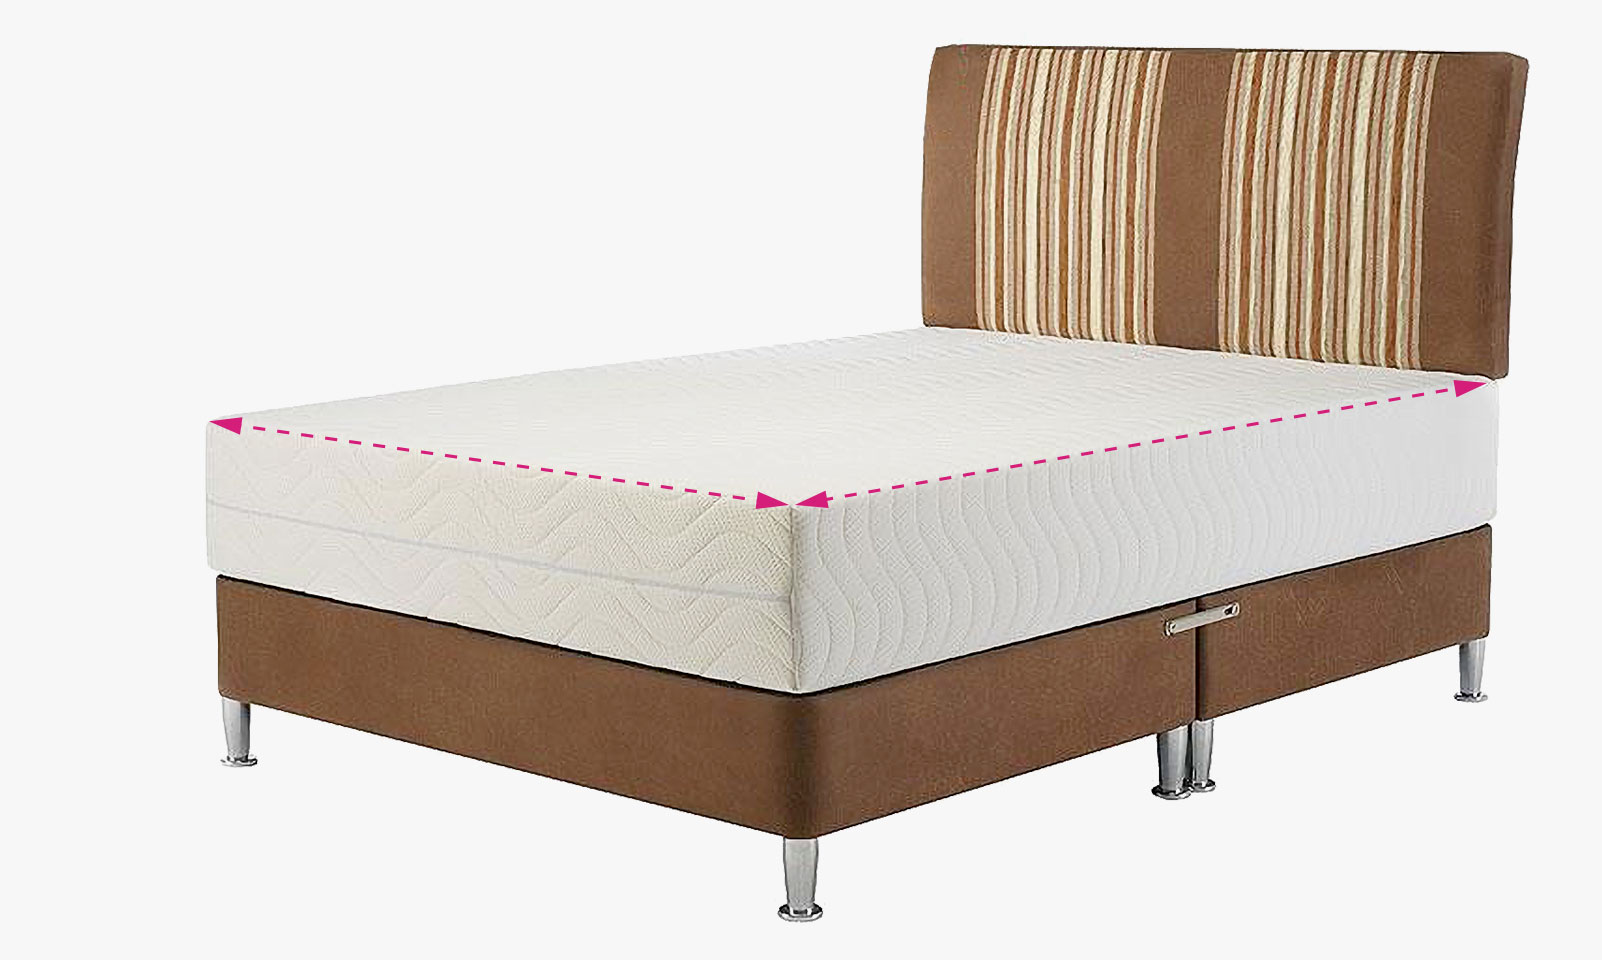 odd size bed mattresses